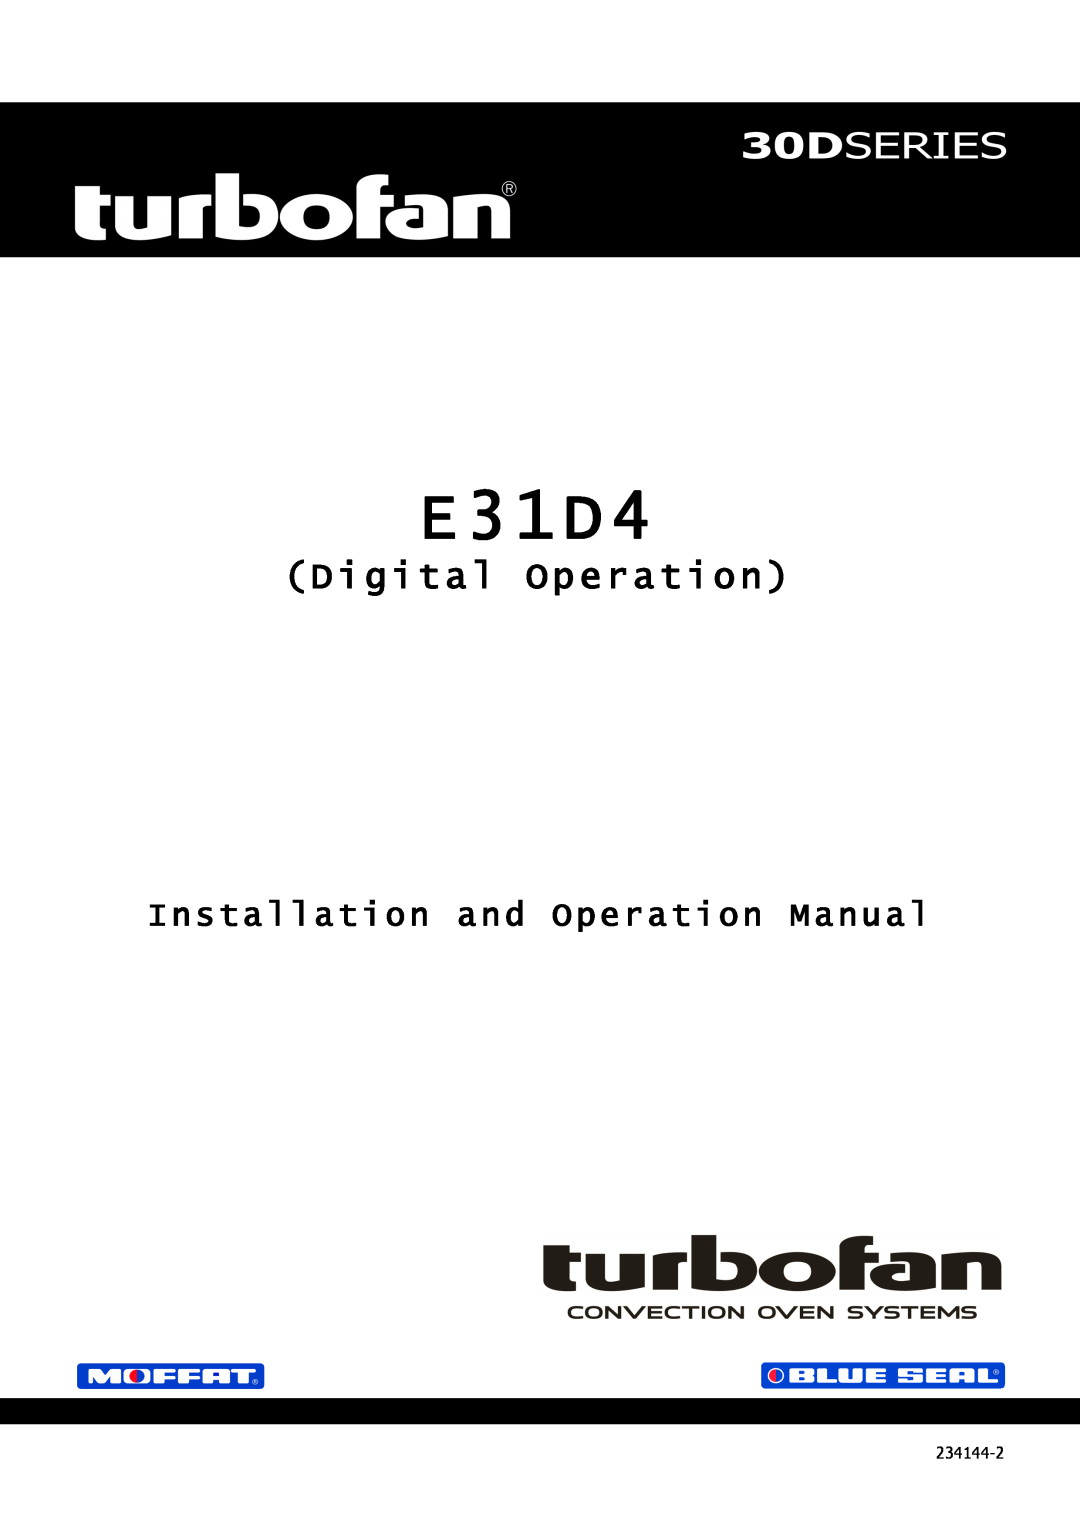 Moffat E31D4 operation manual 30DSERIES, Digital Operation 